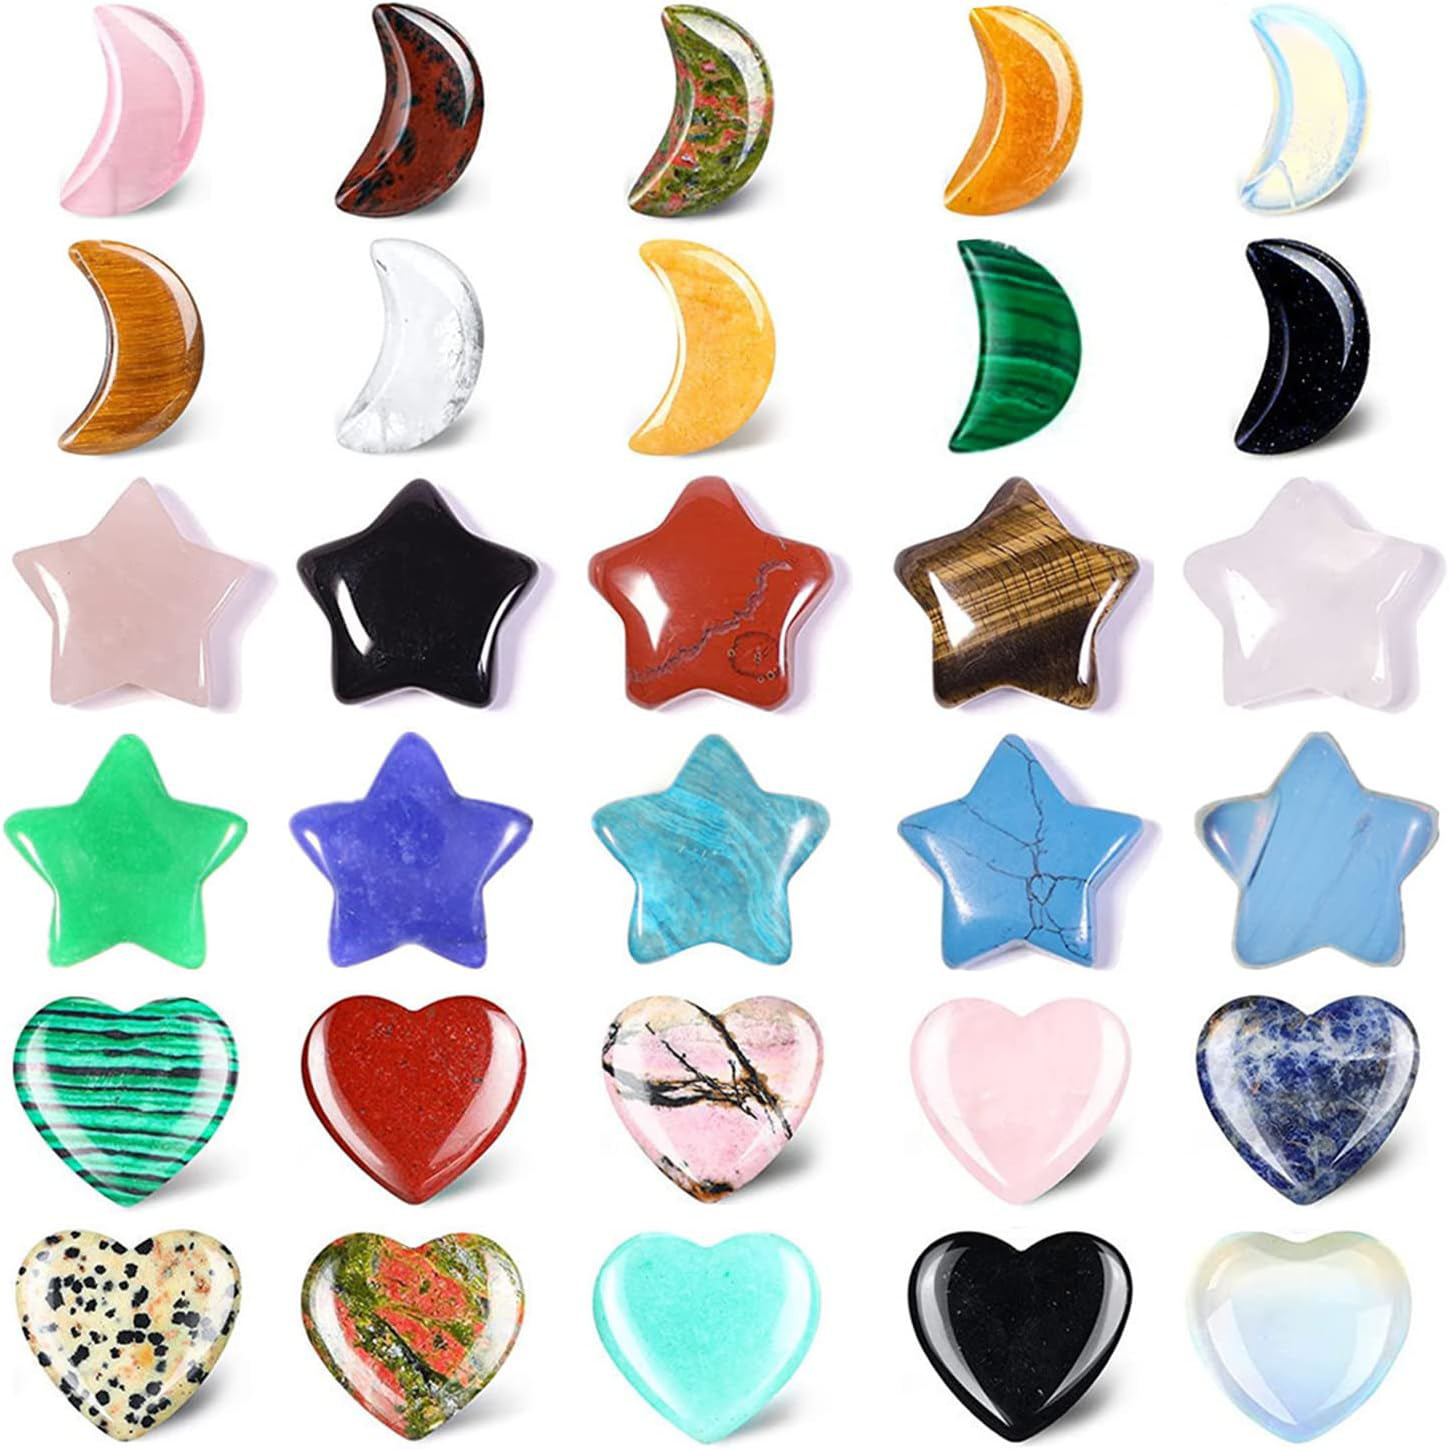 30 Pcs Worry Stones Assorted Heart Star Moon Shaped Crystal Stones Bulks 0.8Inch